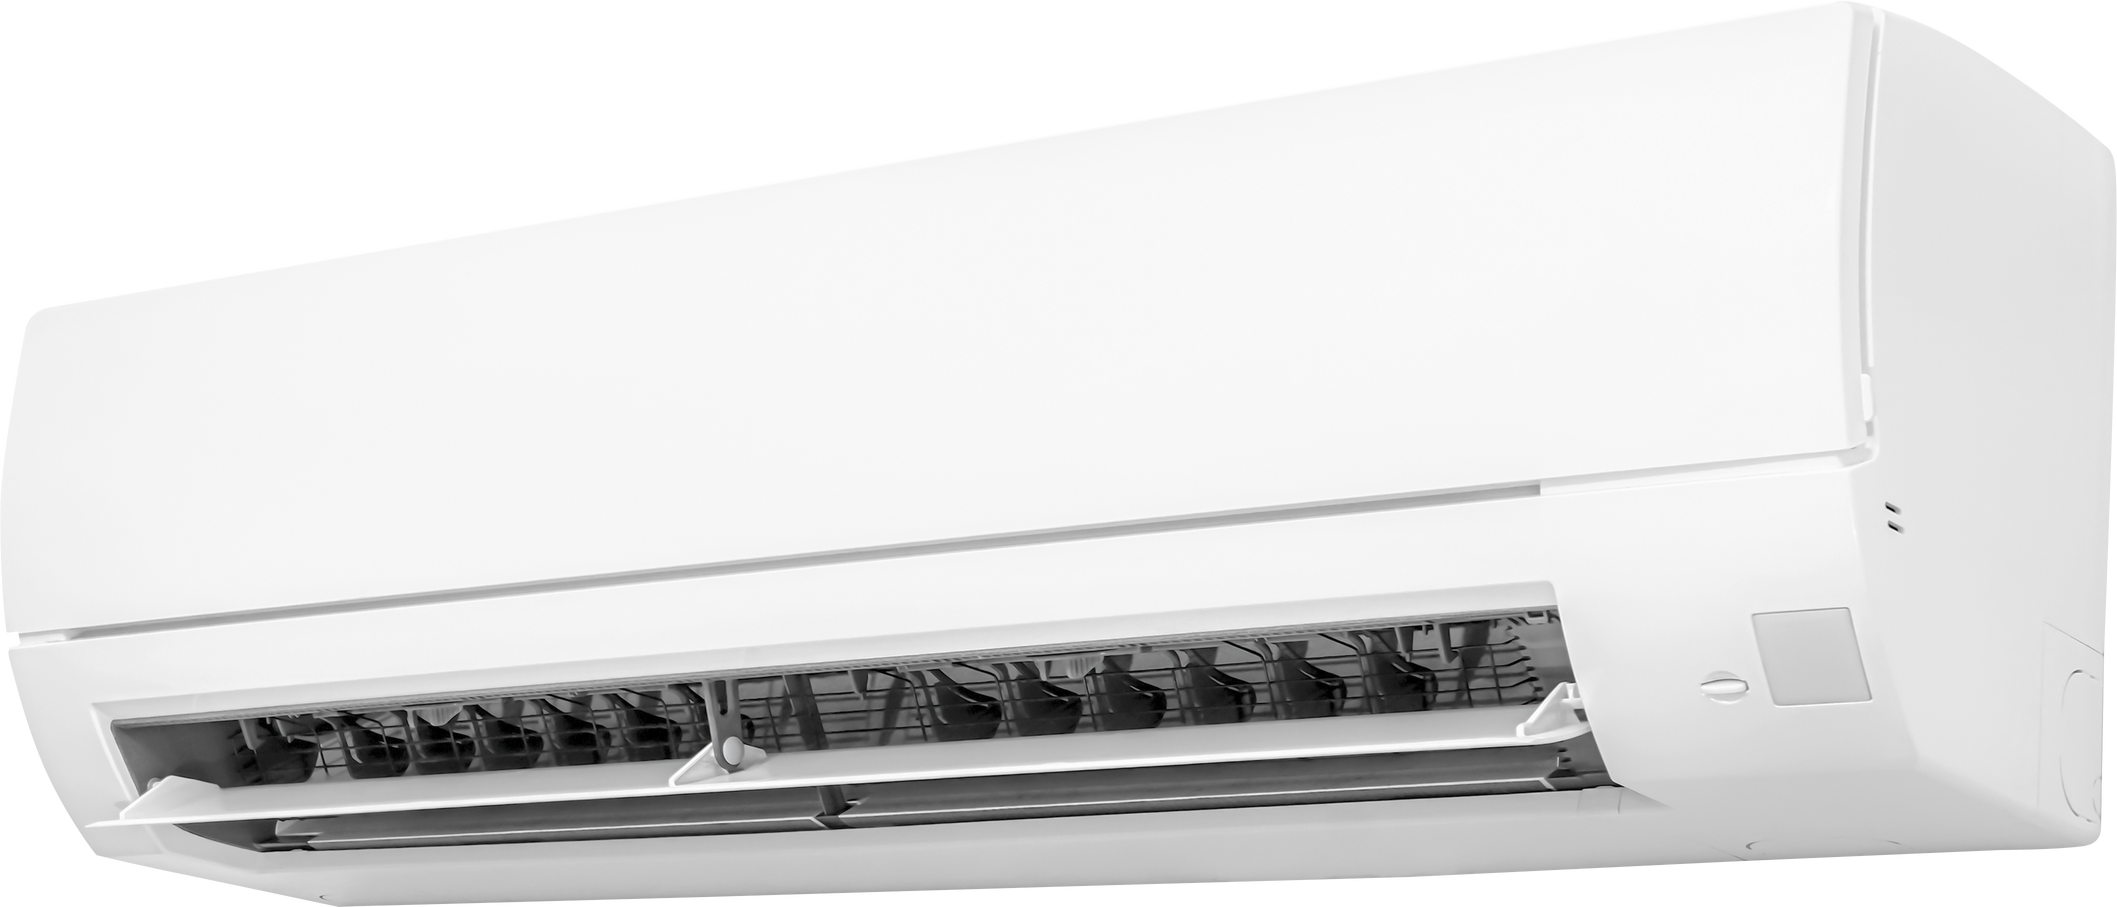 White Air Conditioner